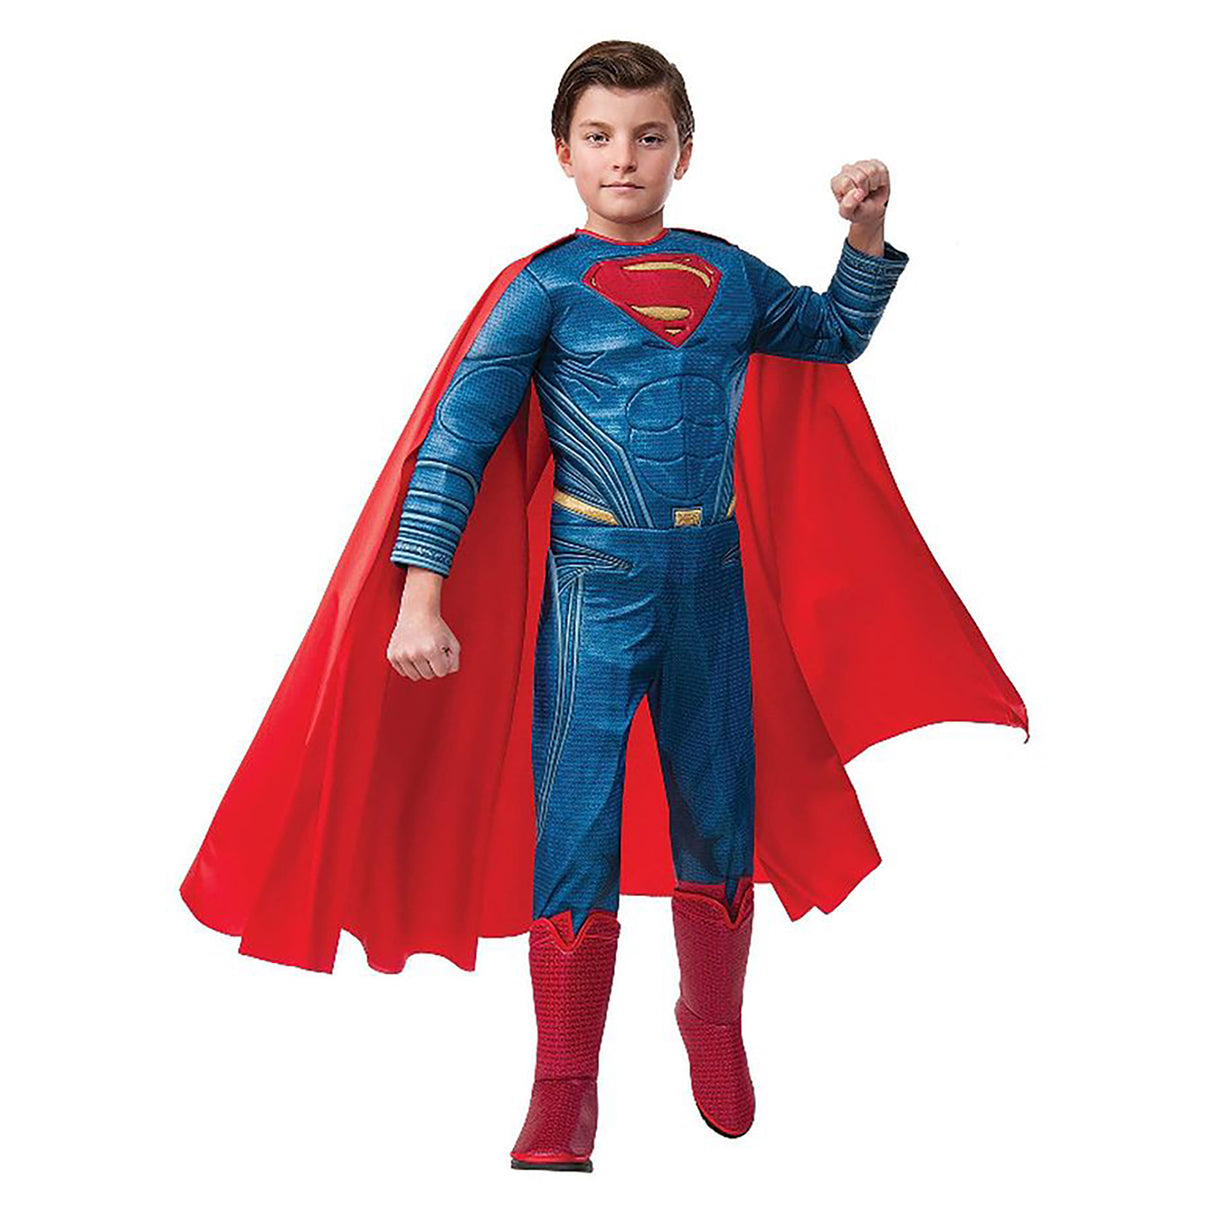 Rubies DC Comics Superman Premium Child Costume, Blue/Red (6-8 years)